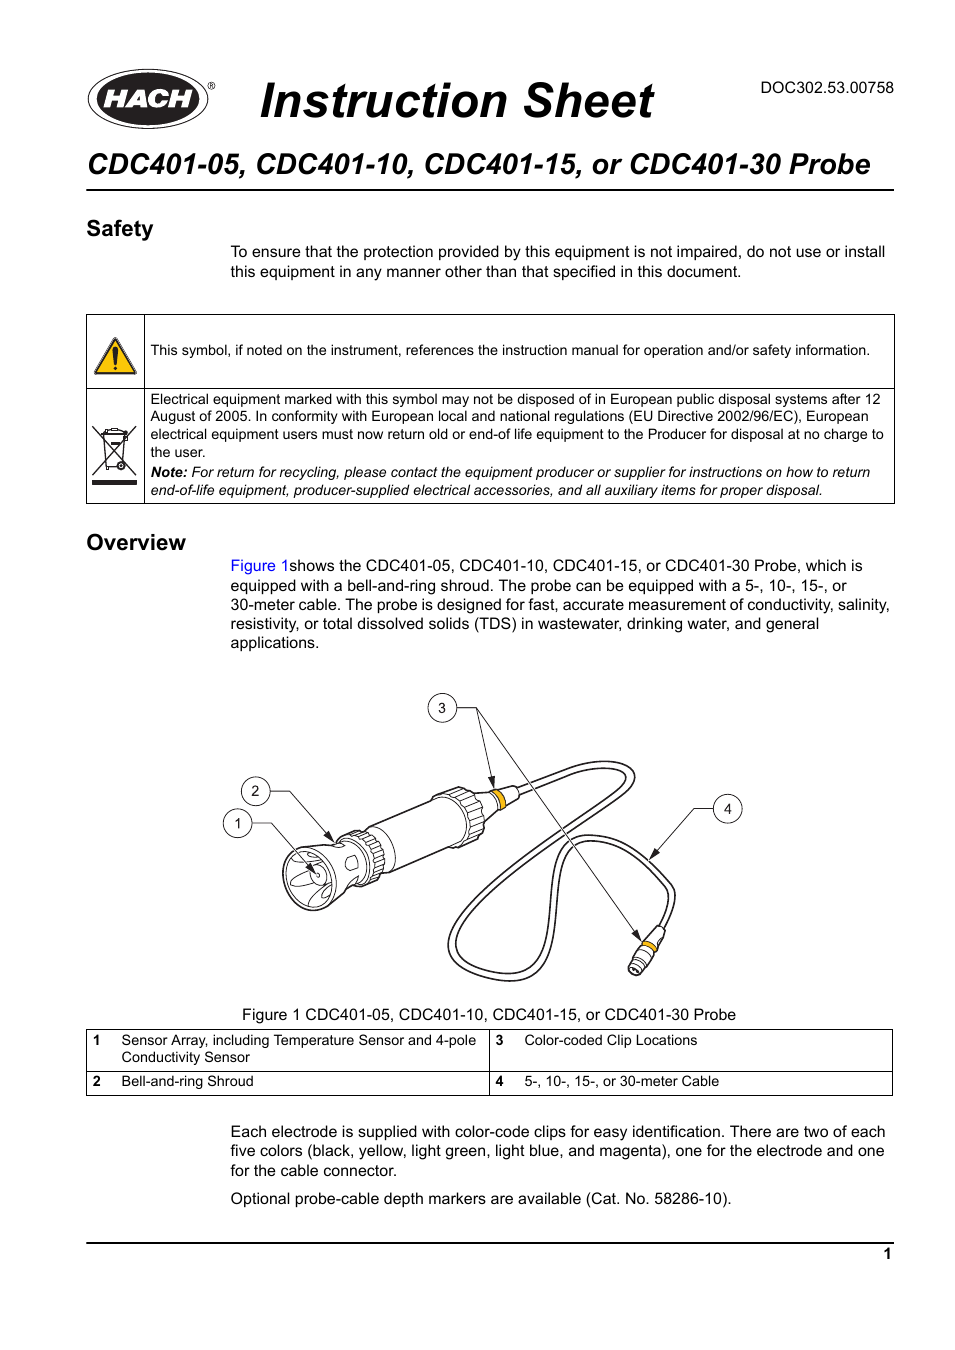 CDC401-30 Instruction Sheet